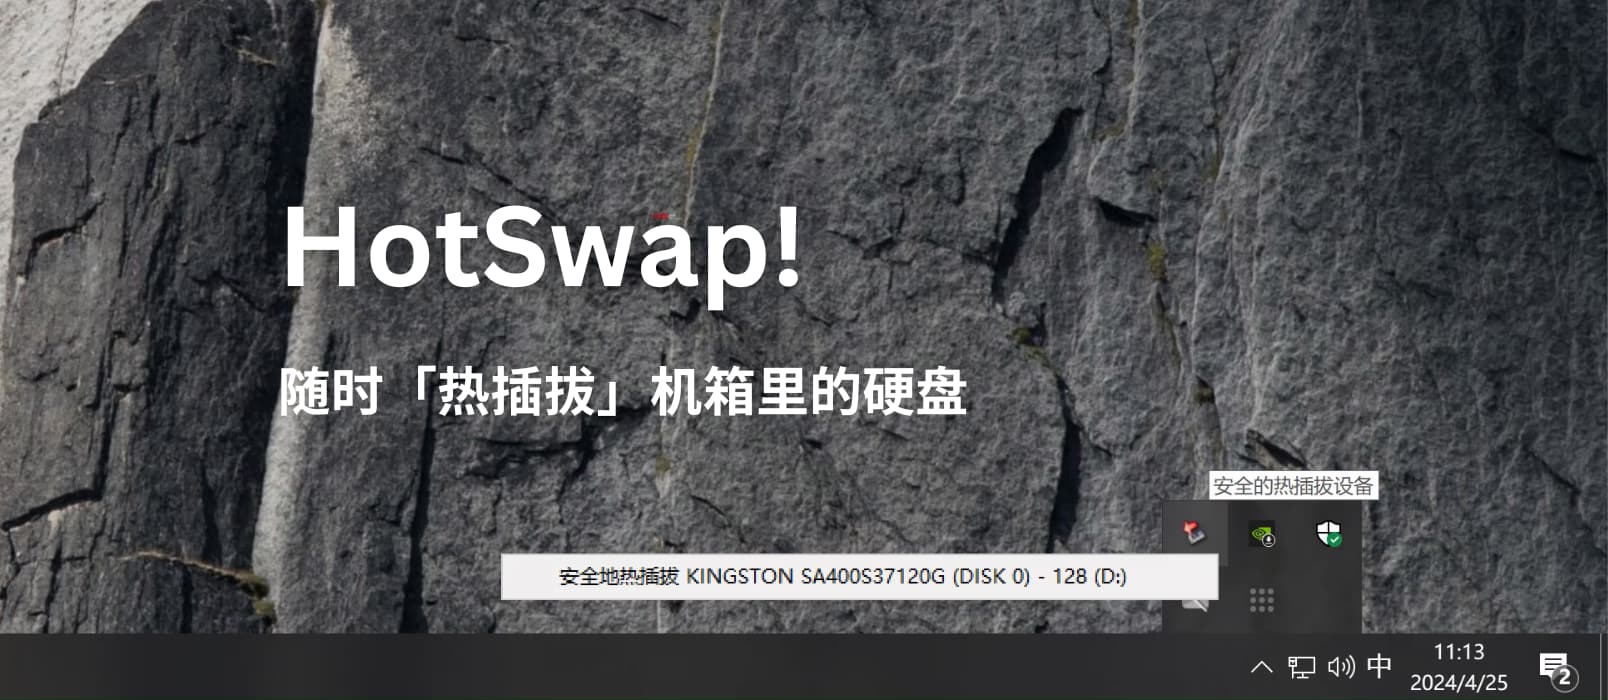 HotSwap! - 给硬盘加个软件开关，随时「拔掉机箱里的硬盘」[Windows] 7